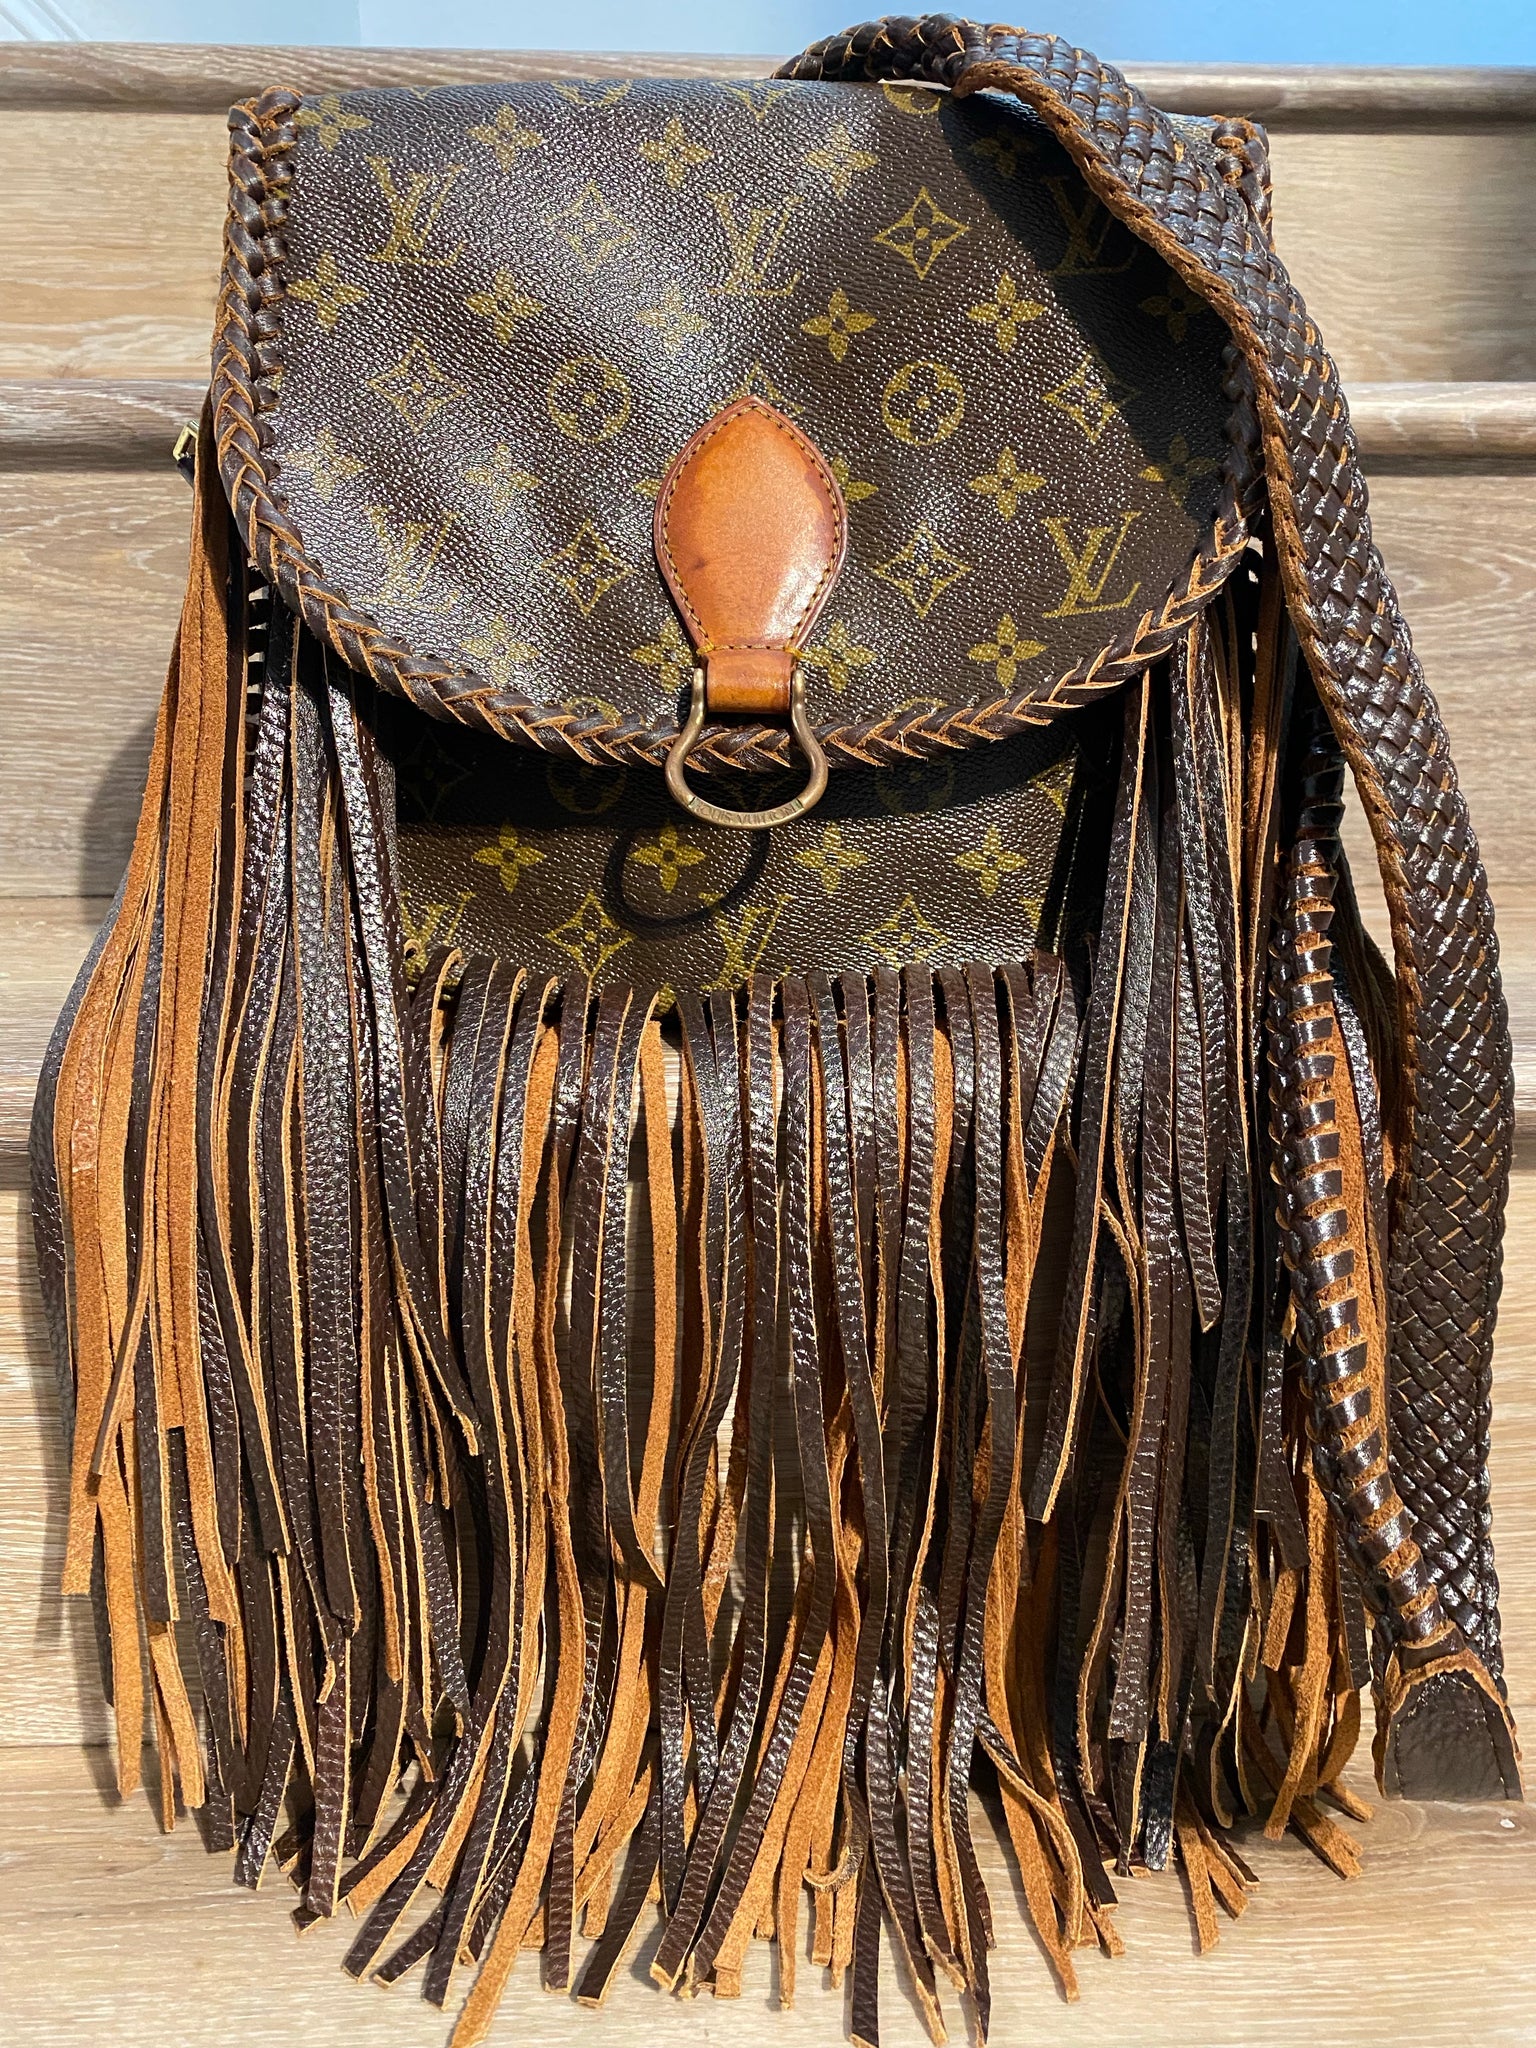 Authentic Vintage Revamped Louis Vuitton St. Cloud Gm Bag W/leather Fringe  Boho